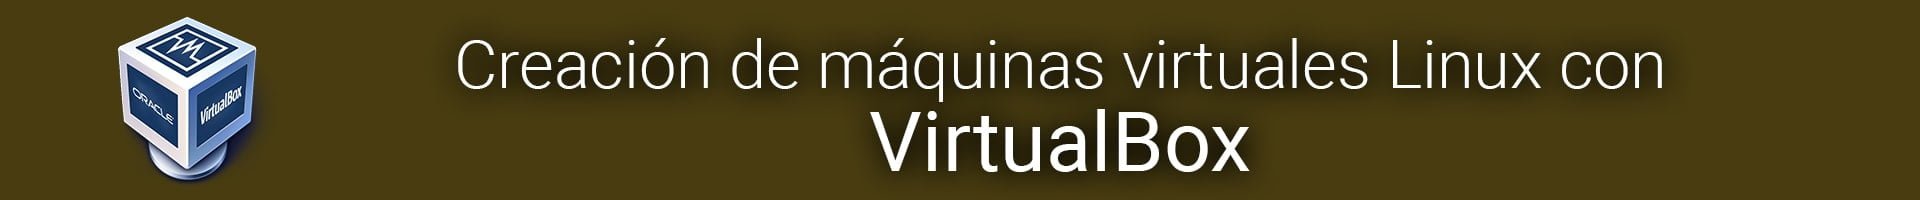 Curso Creación de máquinas virtuales Linux con VirtualBox